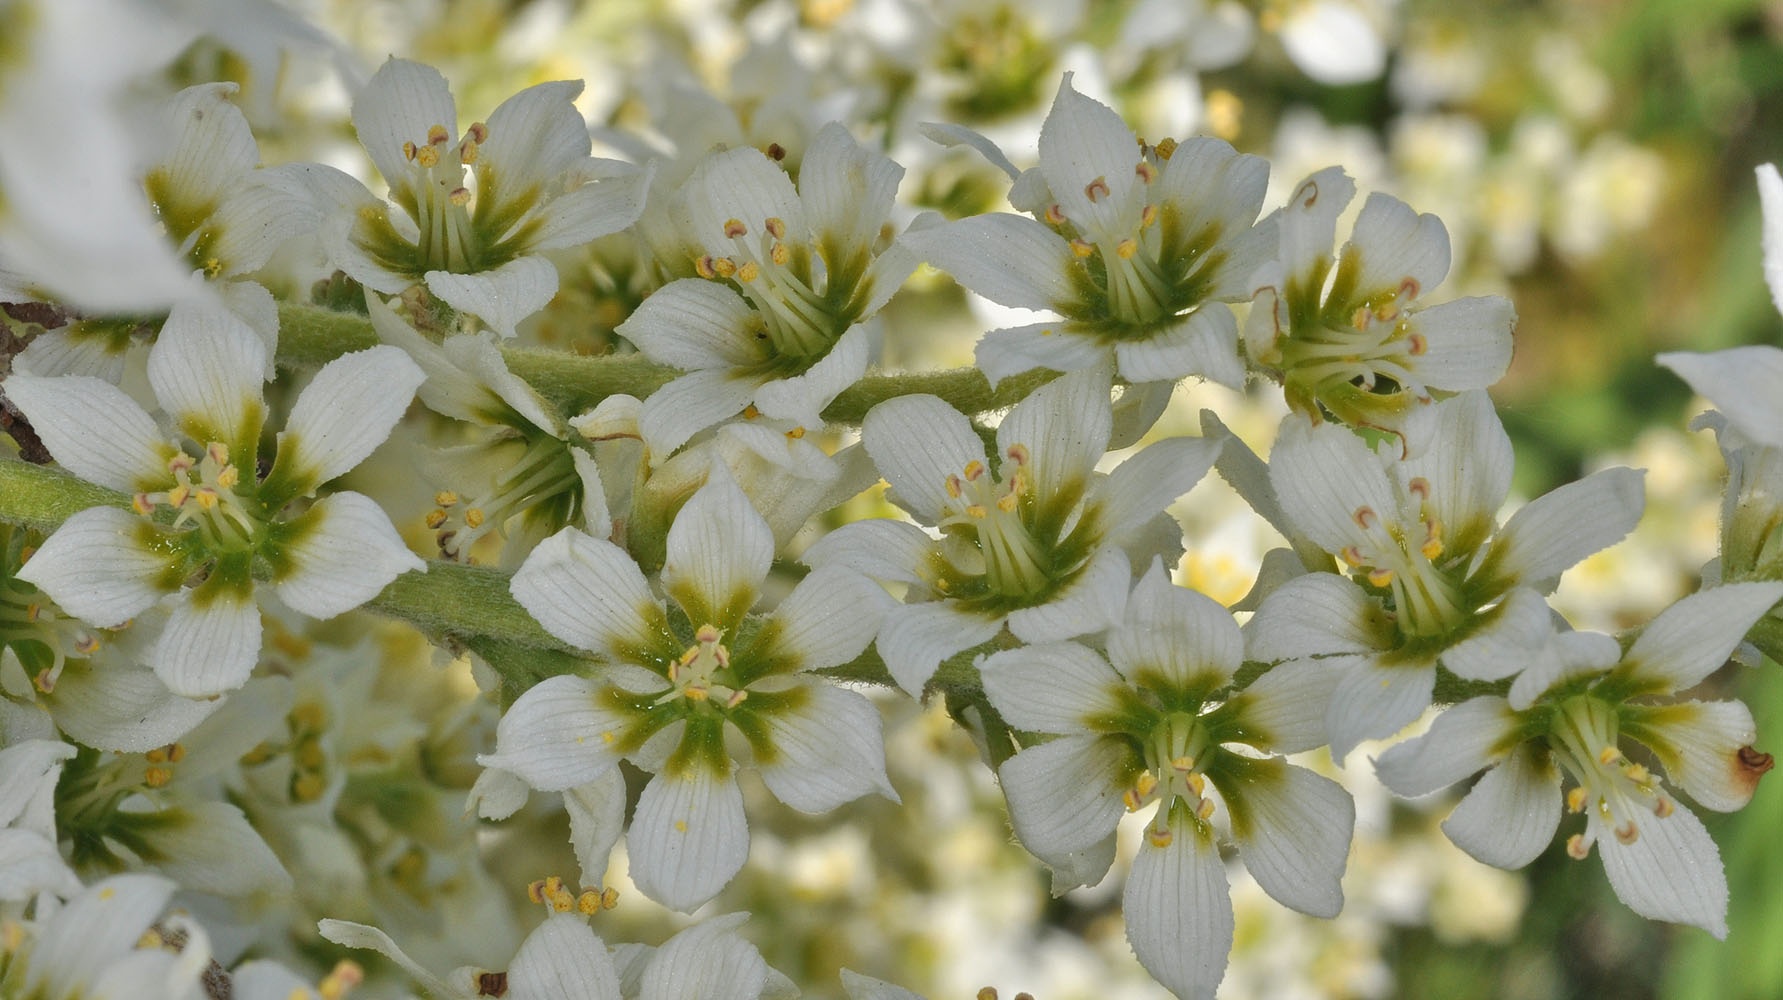 Flora of Eastern Washington Image: Veratrum californicum